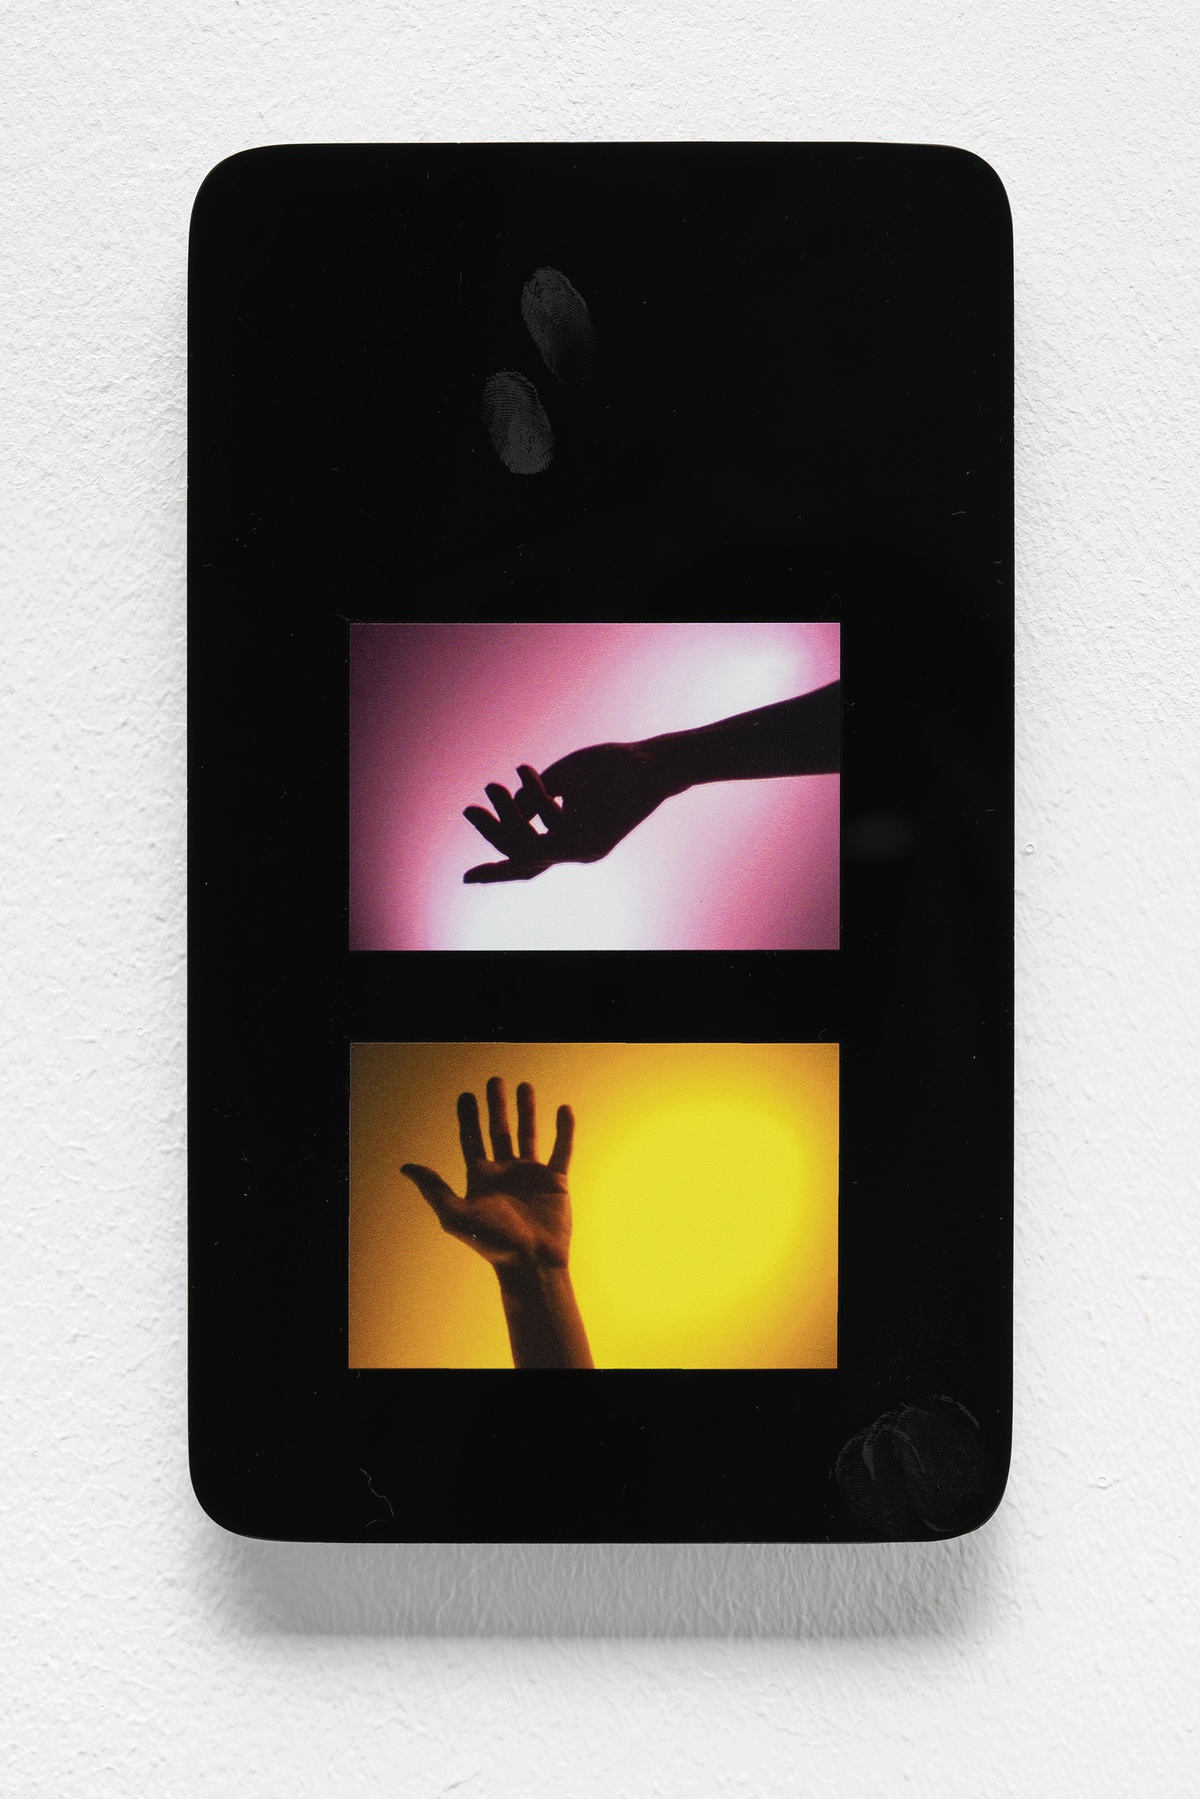 Jenna BlissFriendship #8Plexiglass, UV print of iSight webcam photo, Acrylic paint12.7 × 21.6 × 0.95 cm (3/8” × 5” × 8.5”)